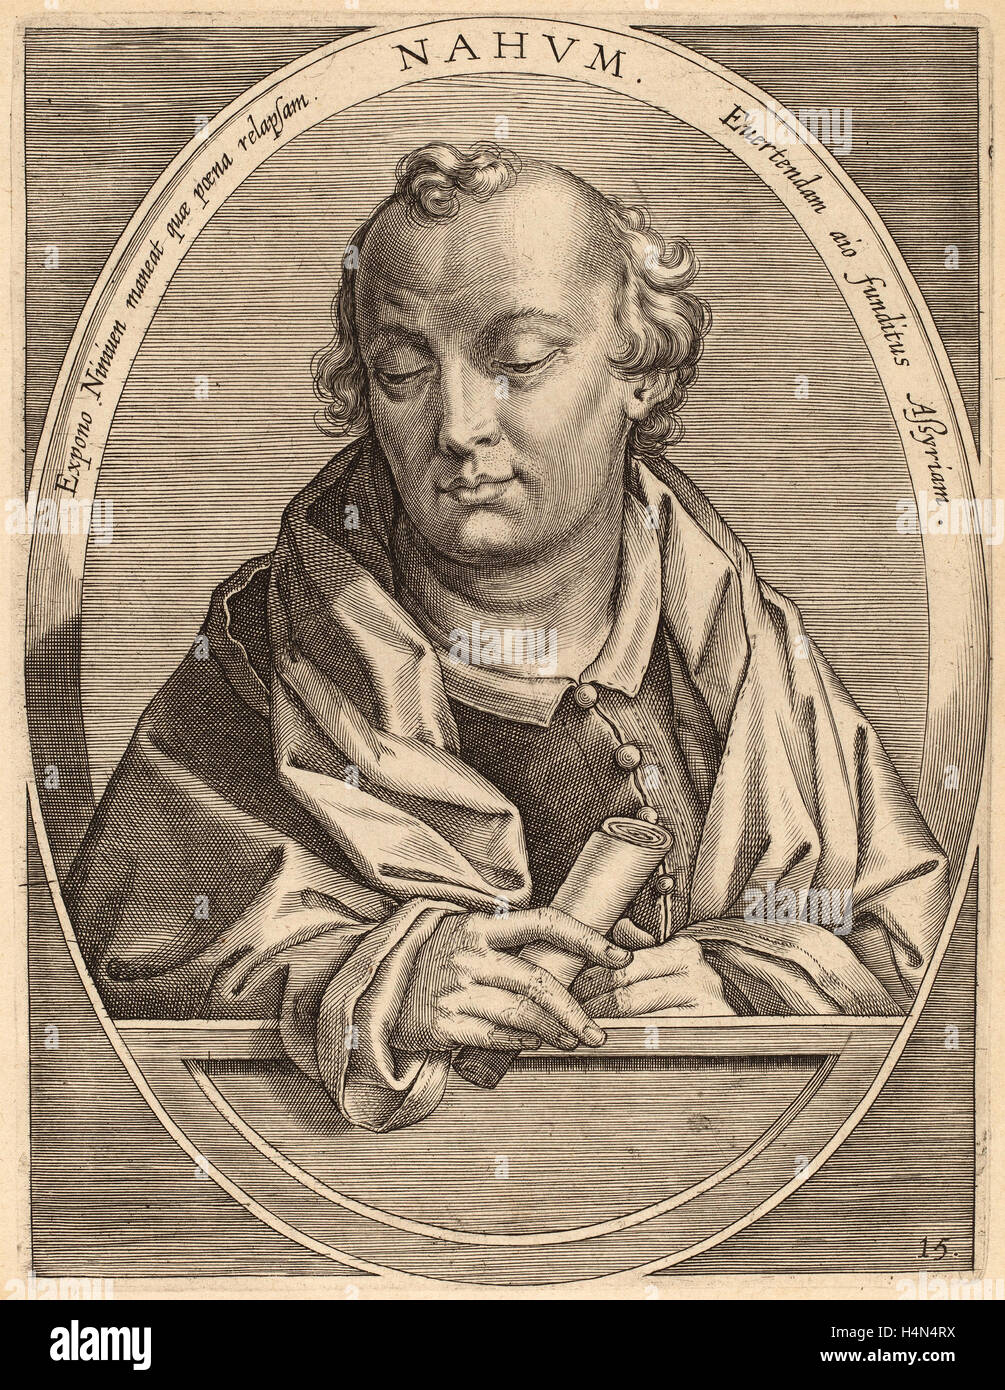 Theodor Galle after Jan van der Straet (Flemish, c. 1571 - 1633), Nahum, published 1613, engraving on laid paper Stock Photo